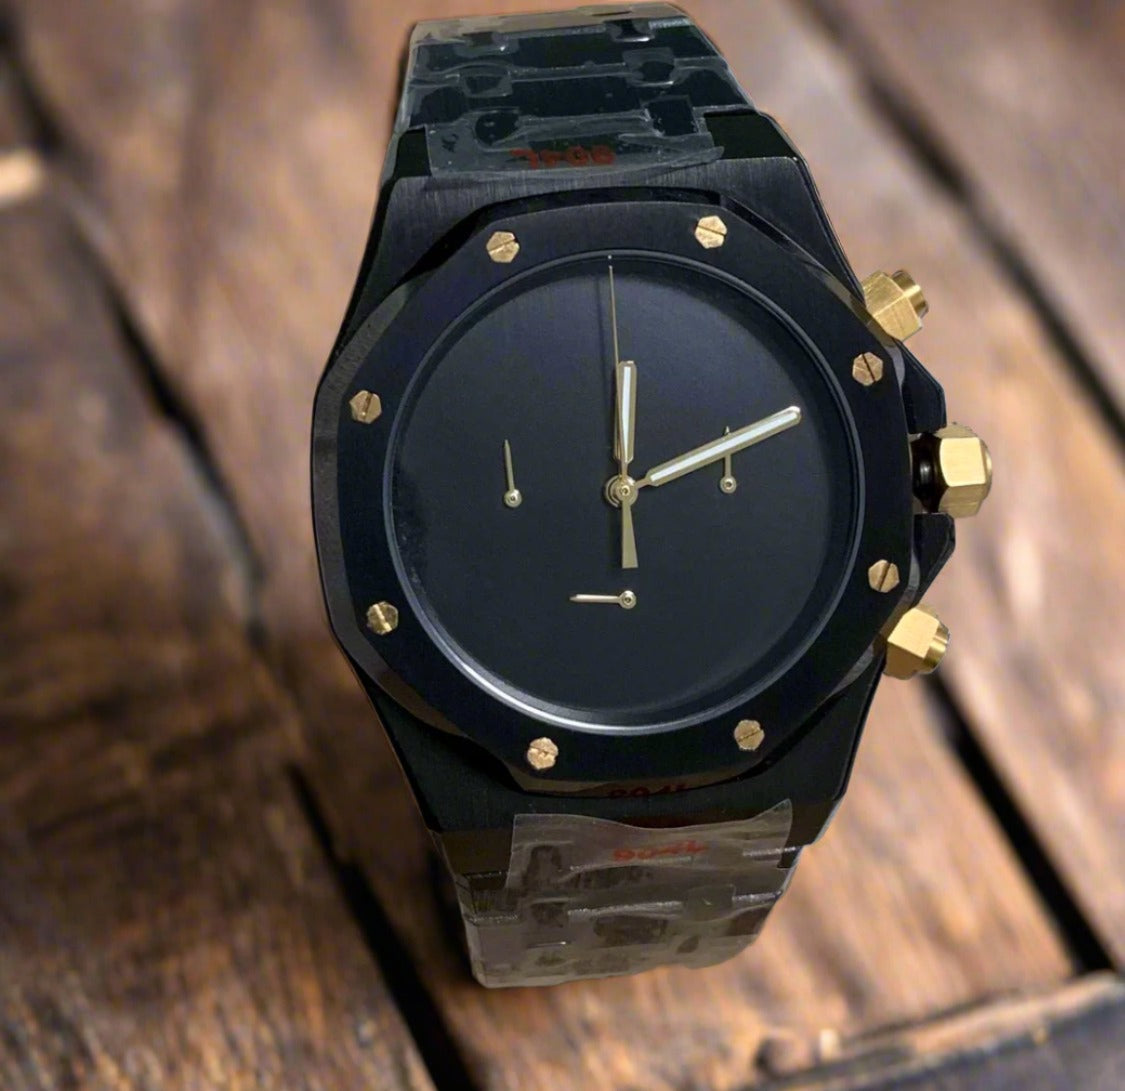 Seiko mod royal oak minimalist chronograph black gold chronograph watch